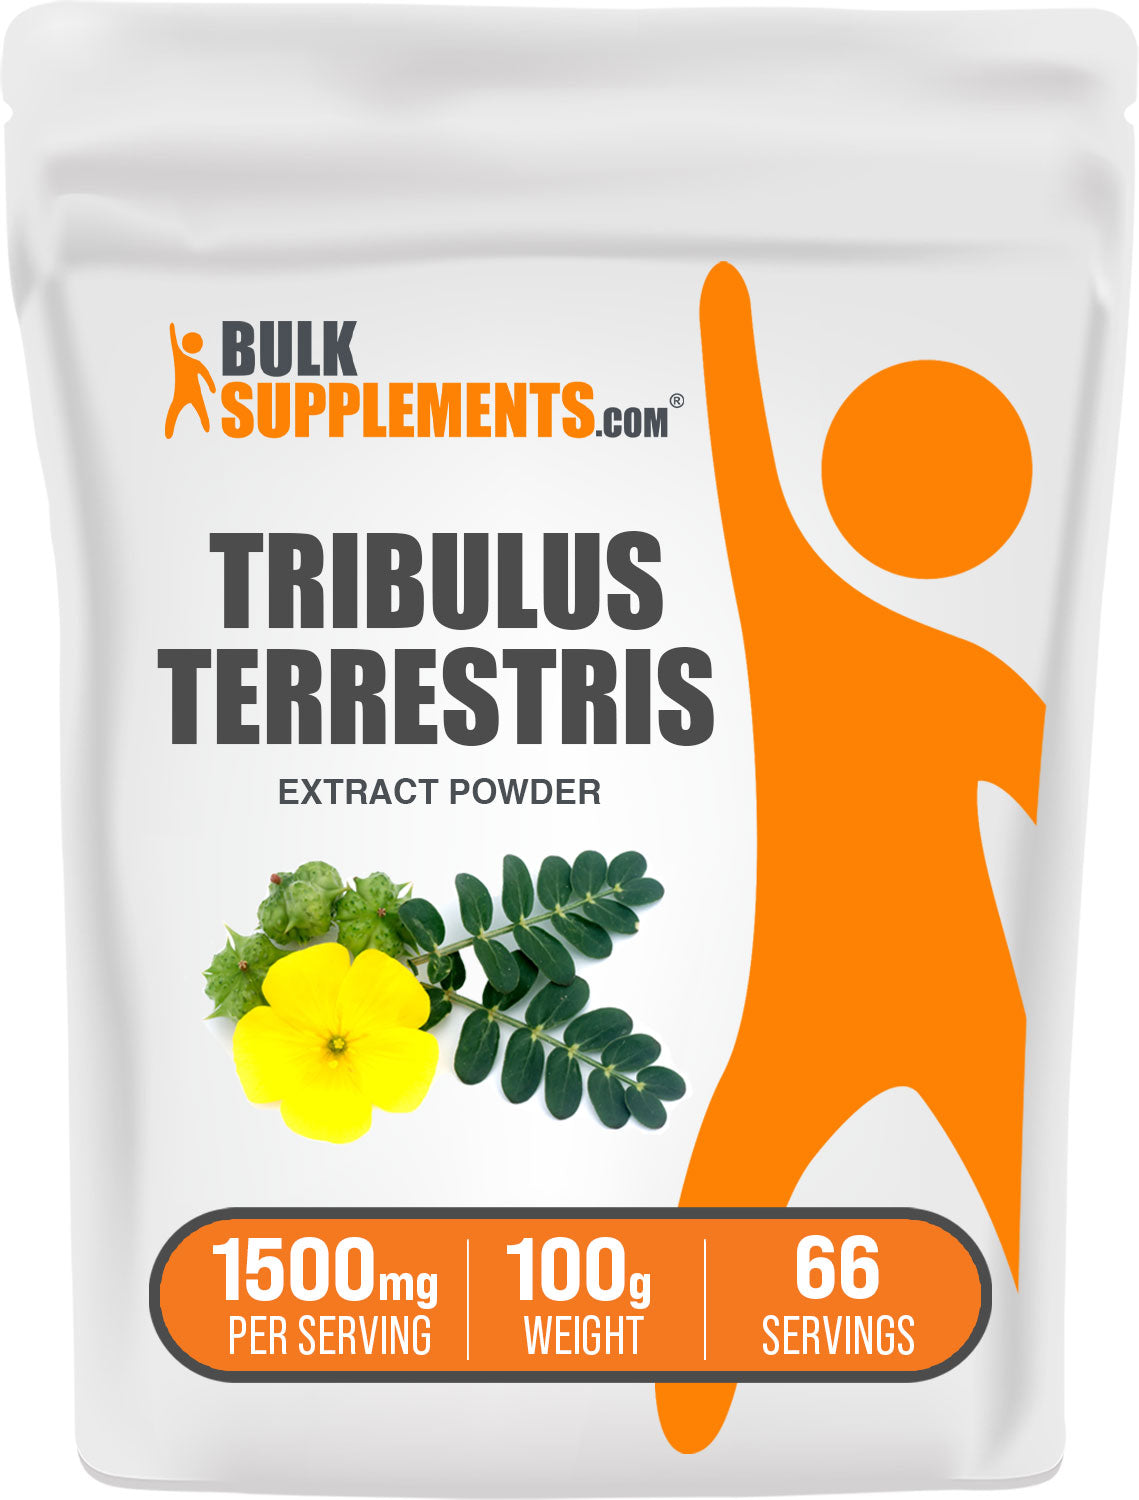 BulkSupplements Tribulus Terrestris Extract Powder 100g bag